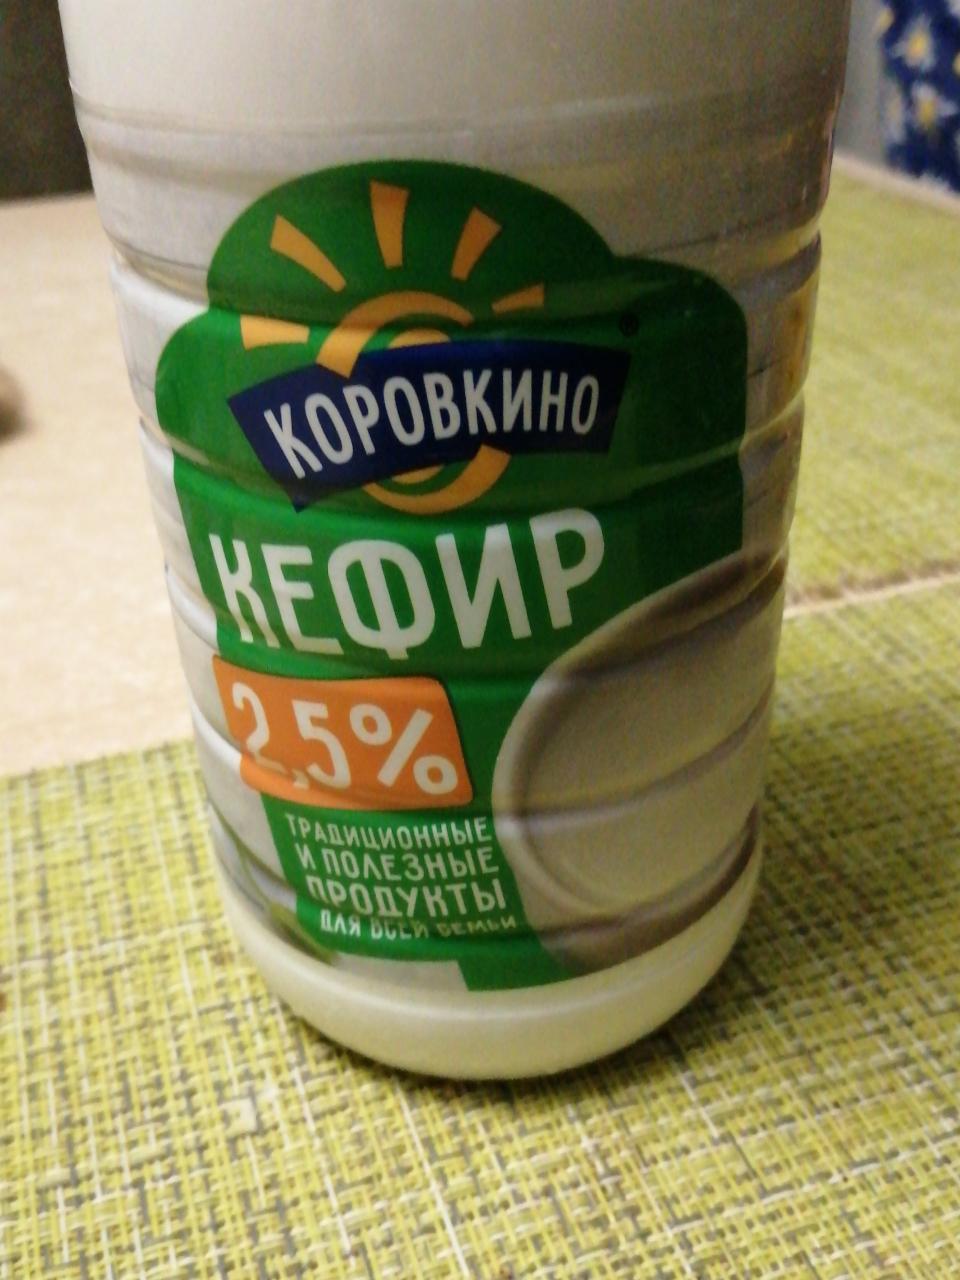 Фото - кефир 2.5% Коровкино